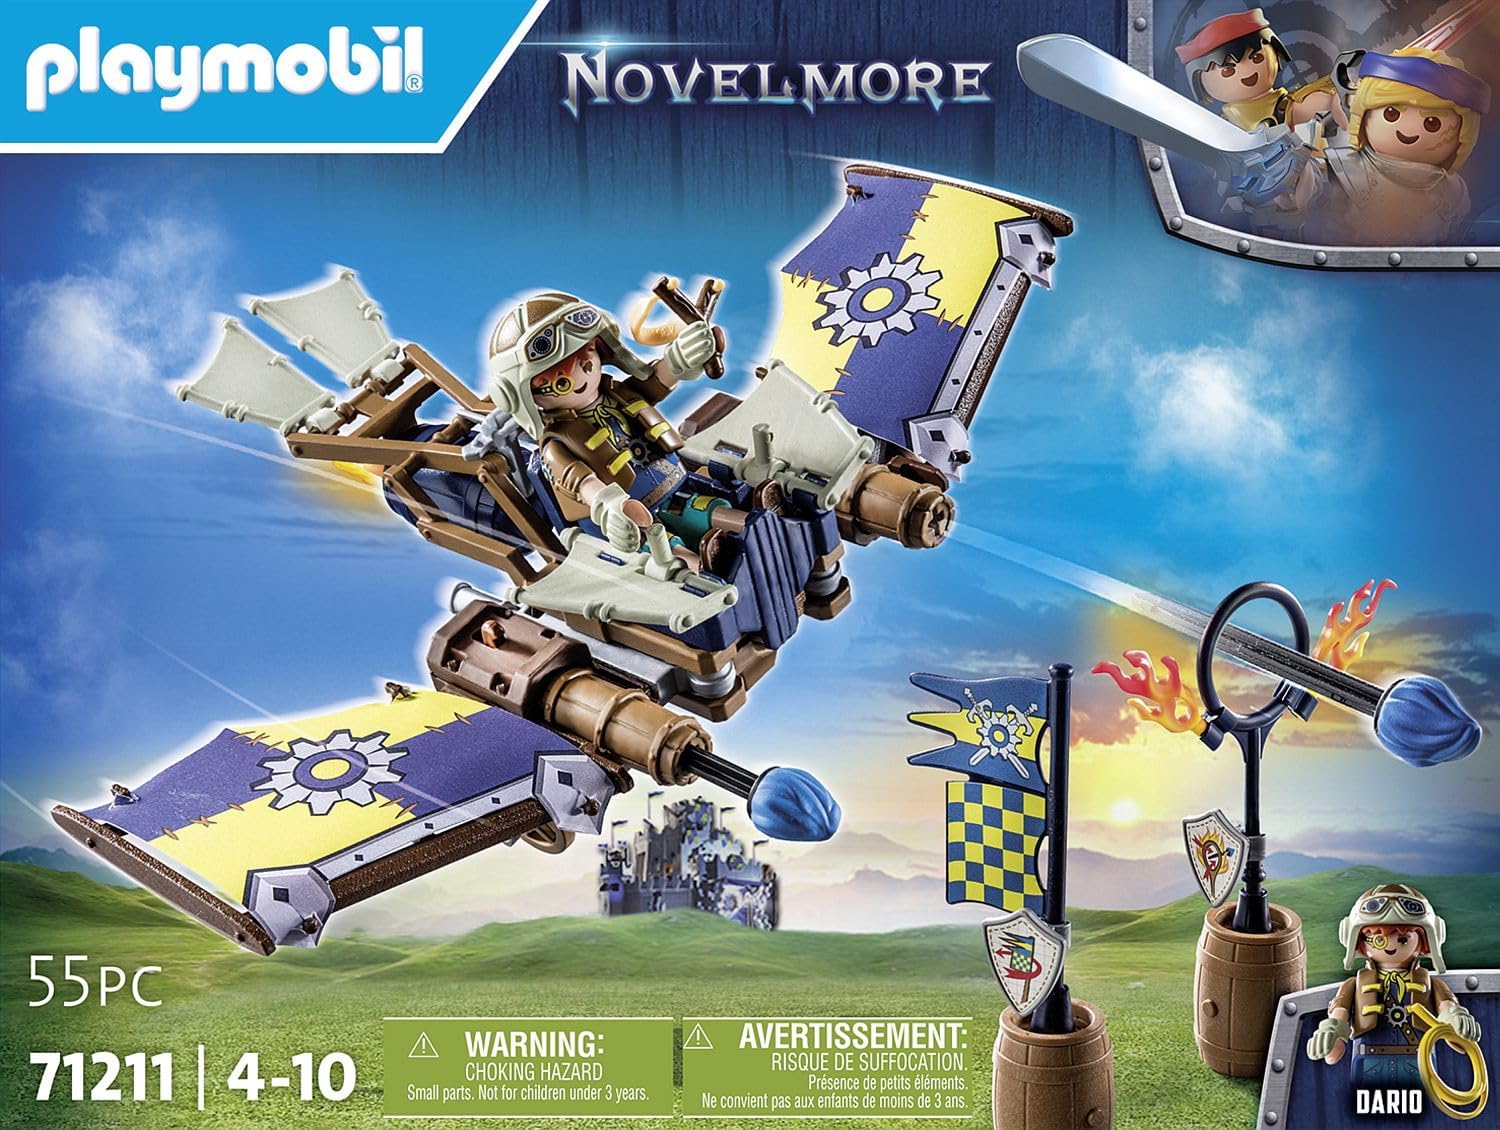 Playmobil-PLAYMOBIL NOVELMORE - BATTLE ROBOT 71300(71300